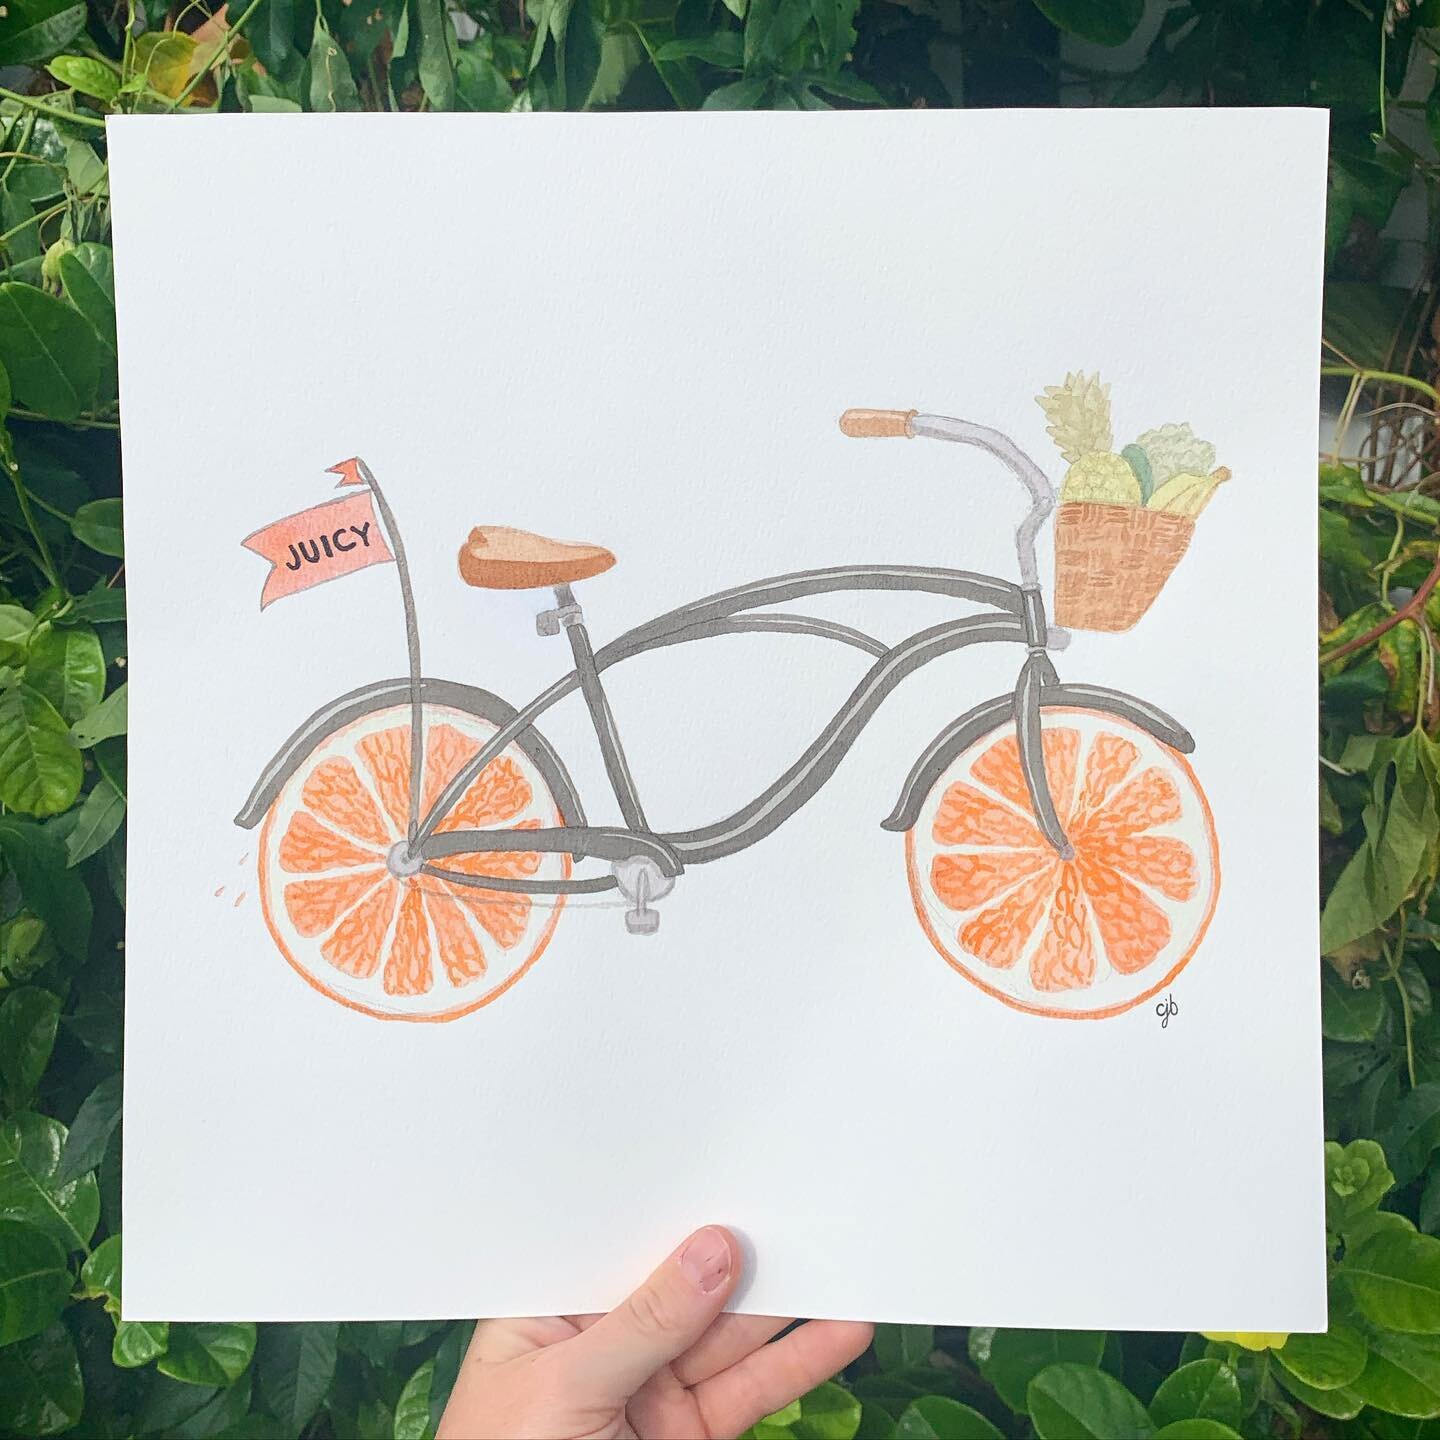 Sweet little bikey bike for @juicystaug 🚲🍊
.
.
.
.
.
#cjinwonderland #carolinejbrown #bike #orange #fruit #biking #bicycle #beachcruiser #juicy #juicysta #watercolor #illustration #illustrator